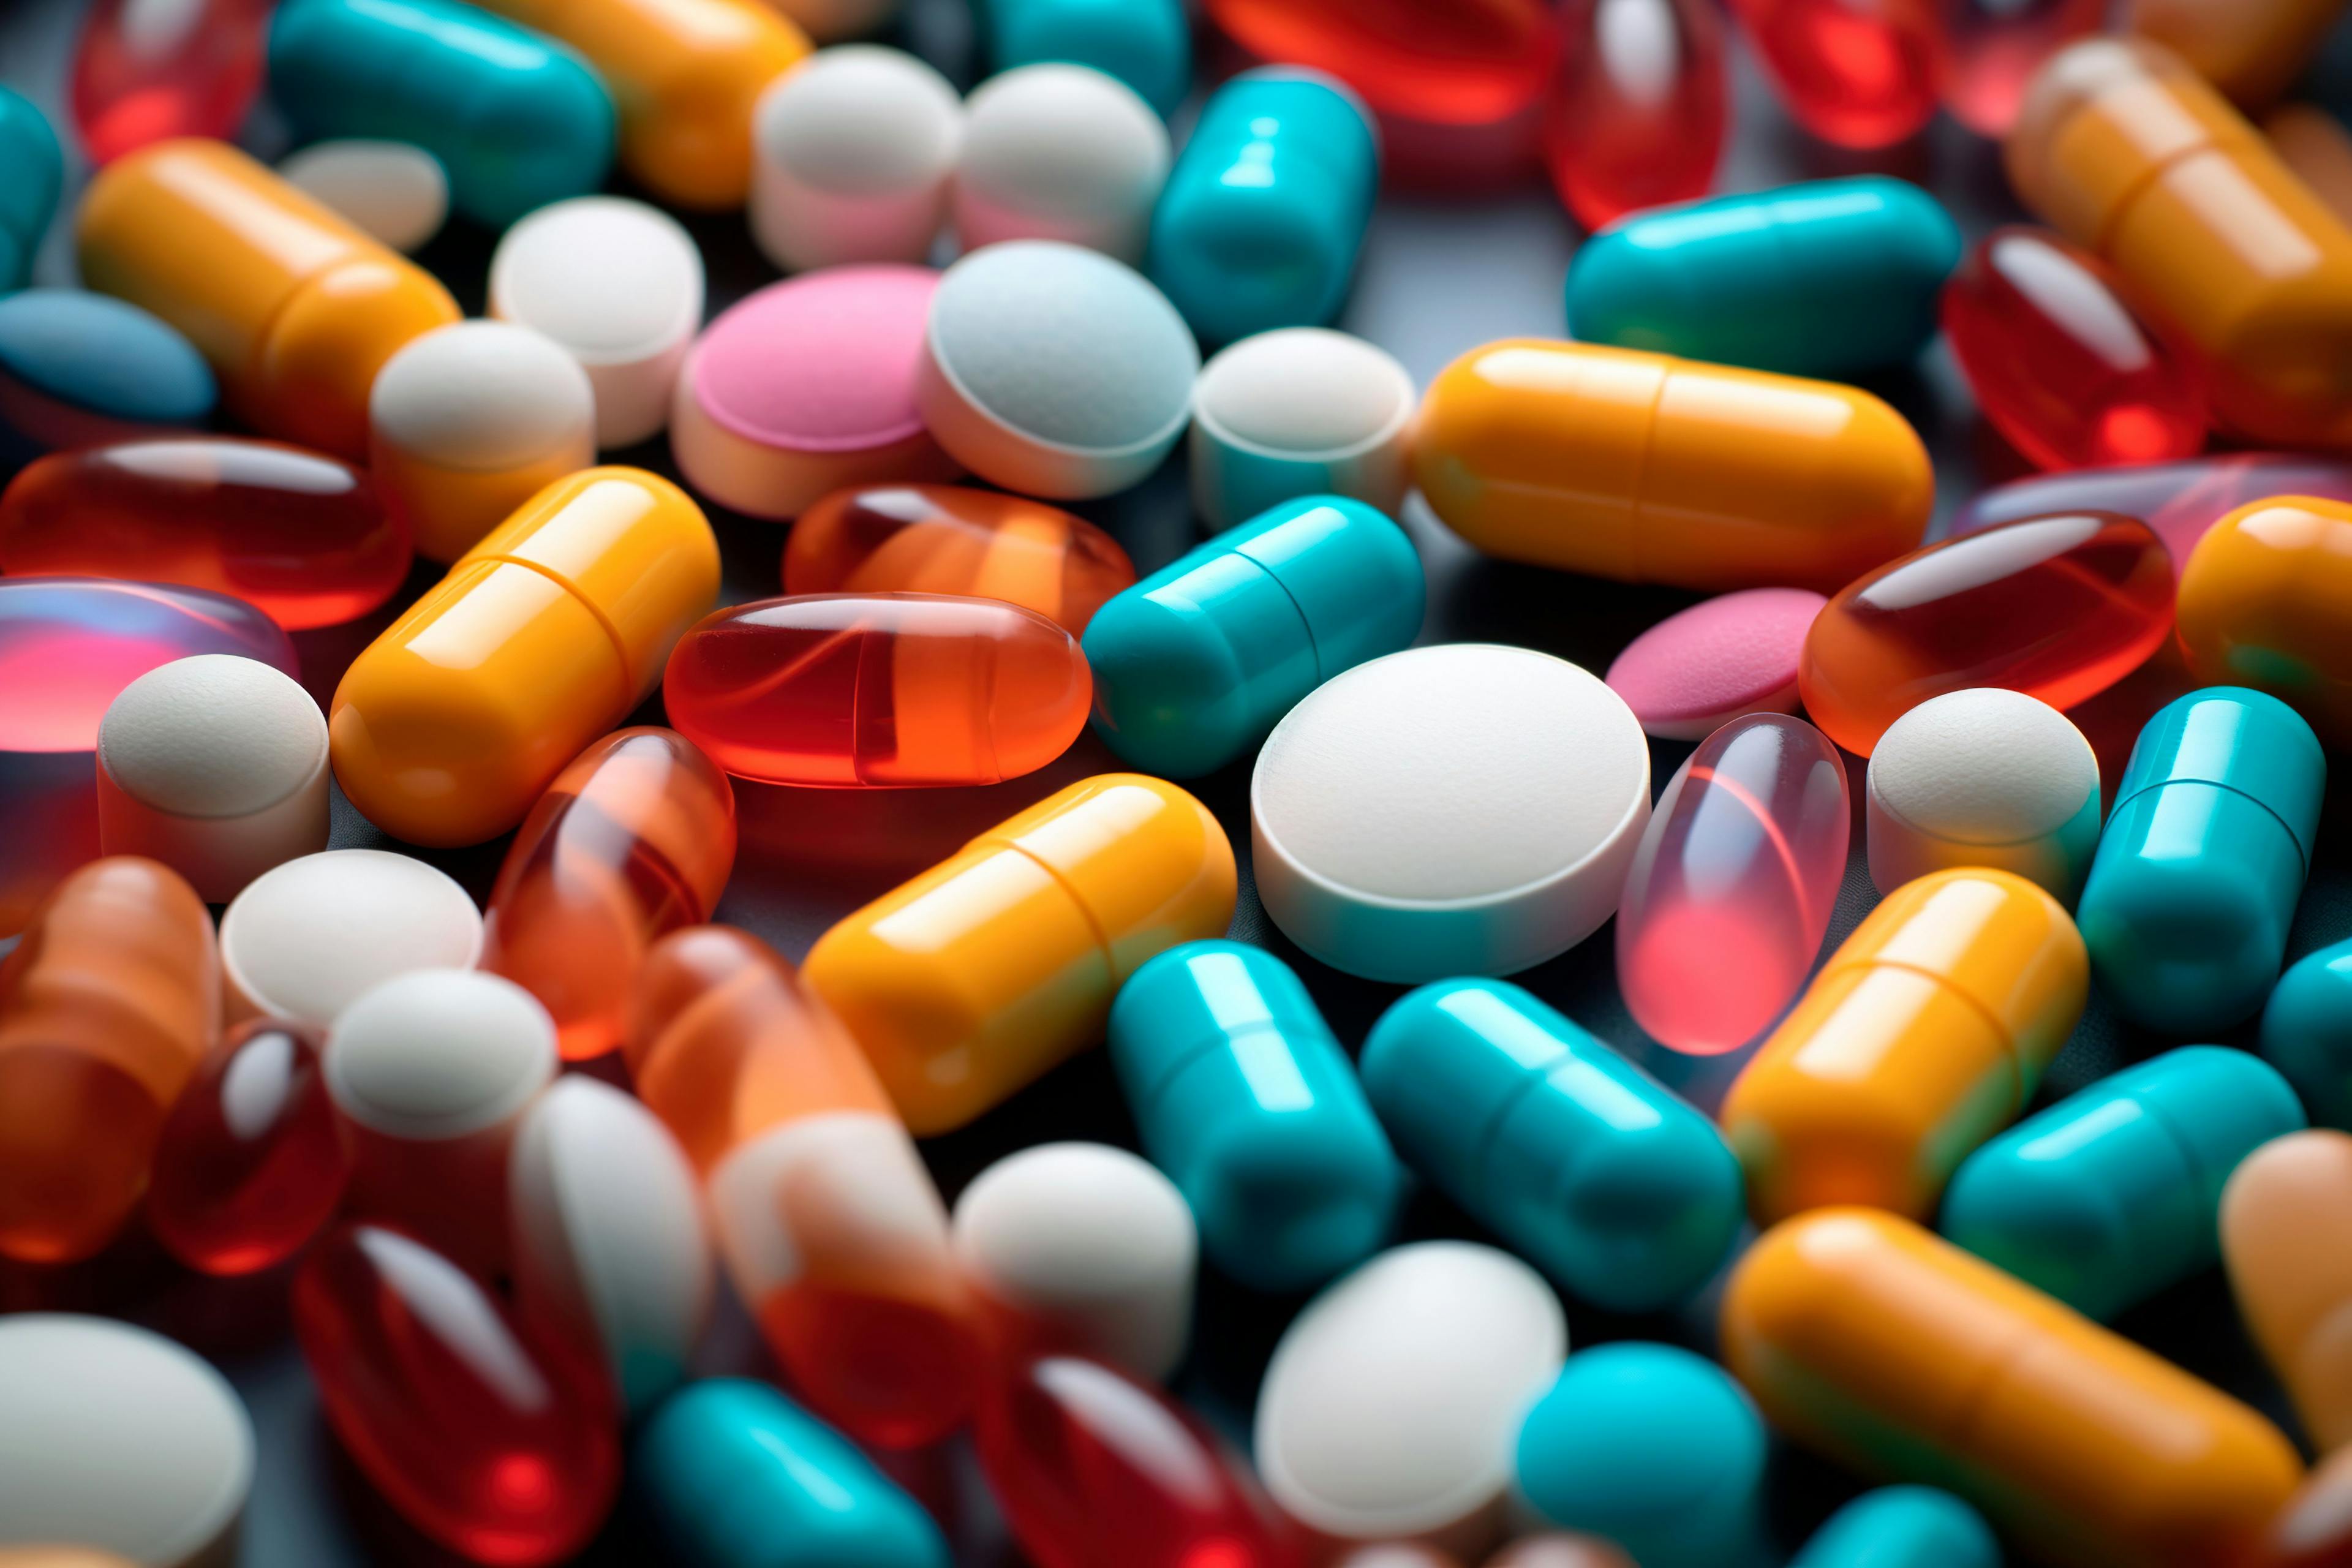 Pills and capsules multi color - Image credit: Jezper | stock.adobe.com 